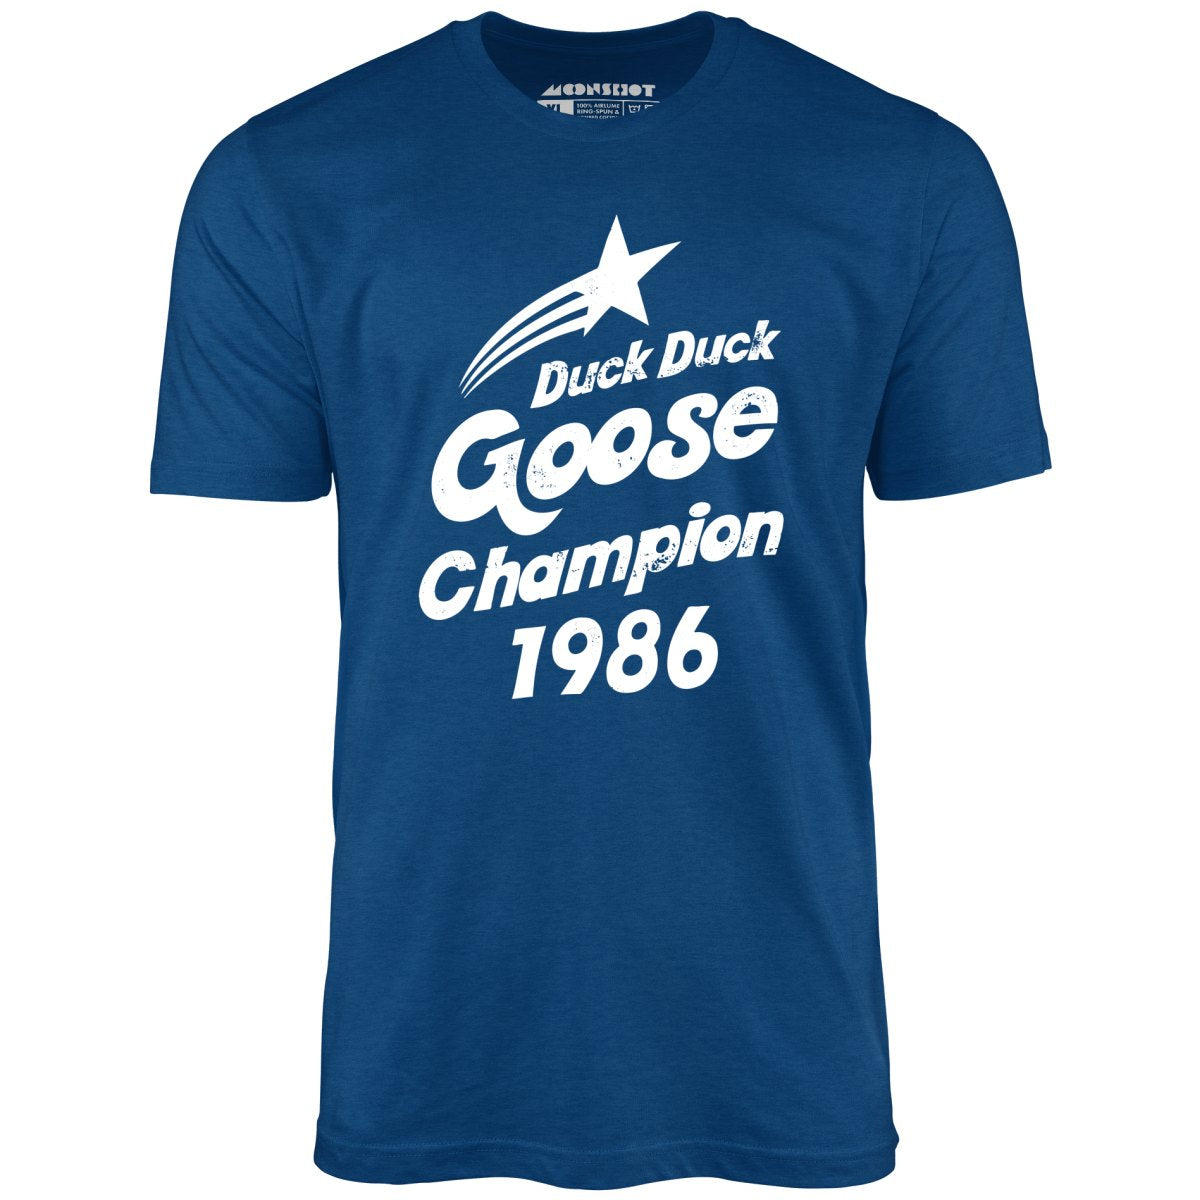 Duck Duck Goose Champion 1986 - Unisex T-Shirt